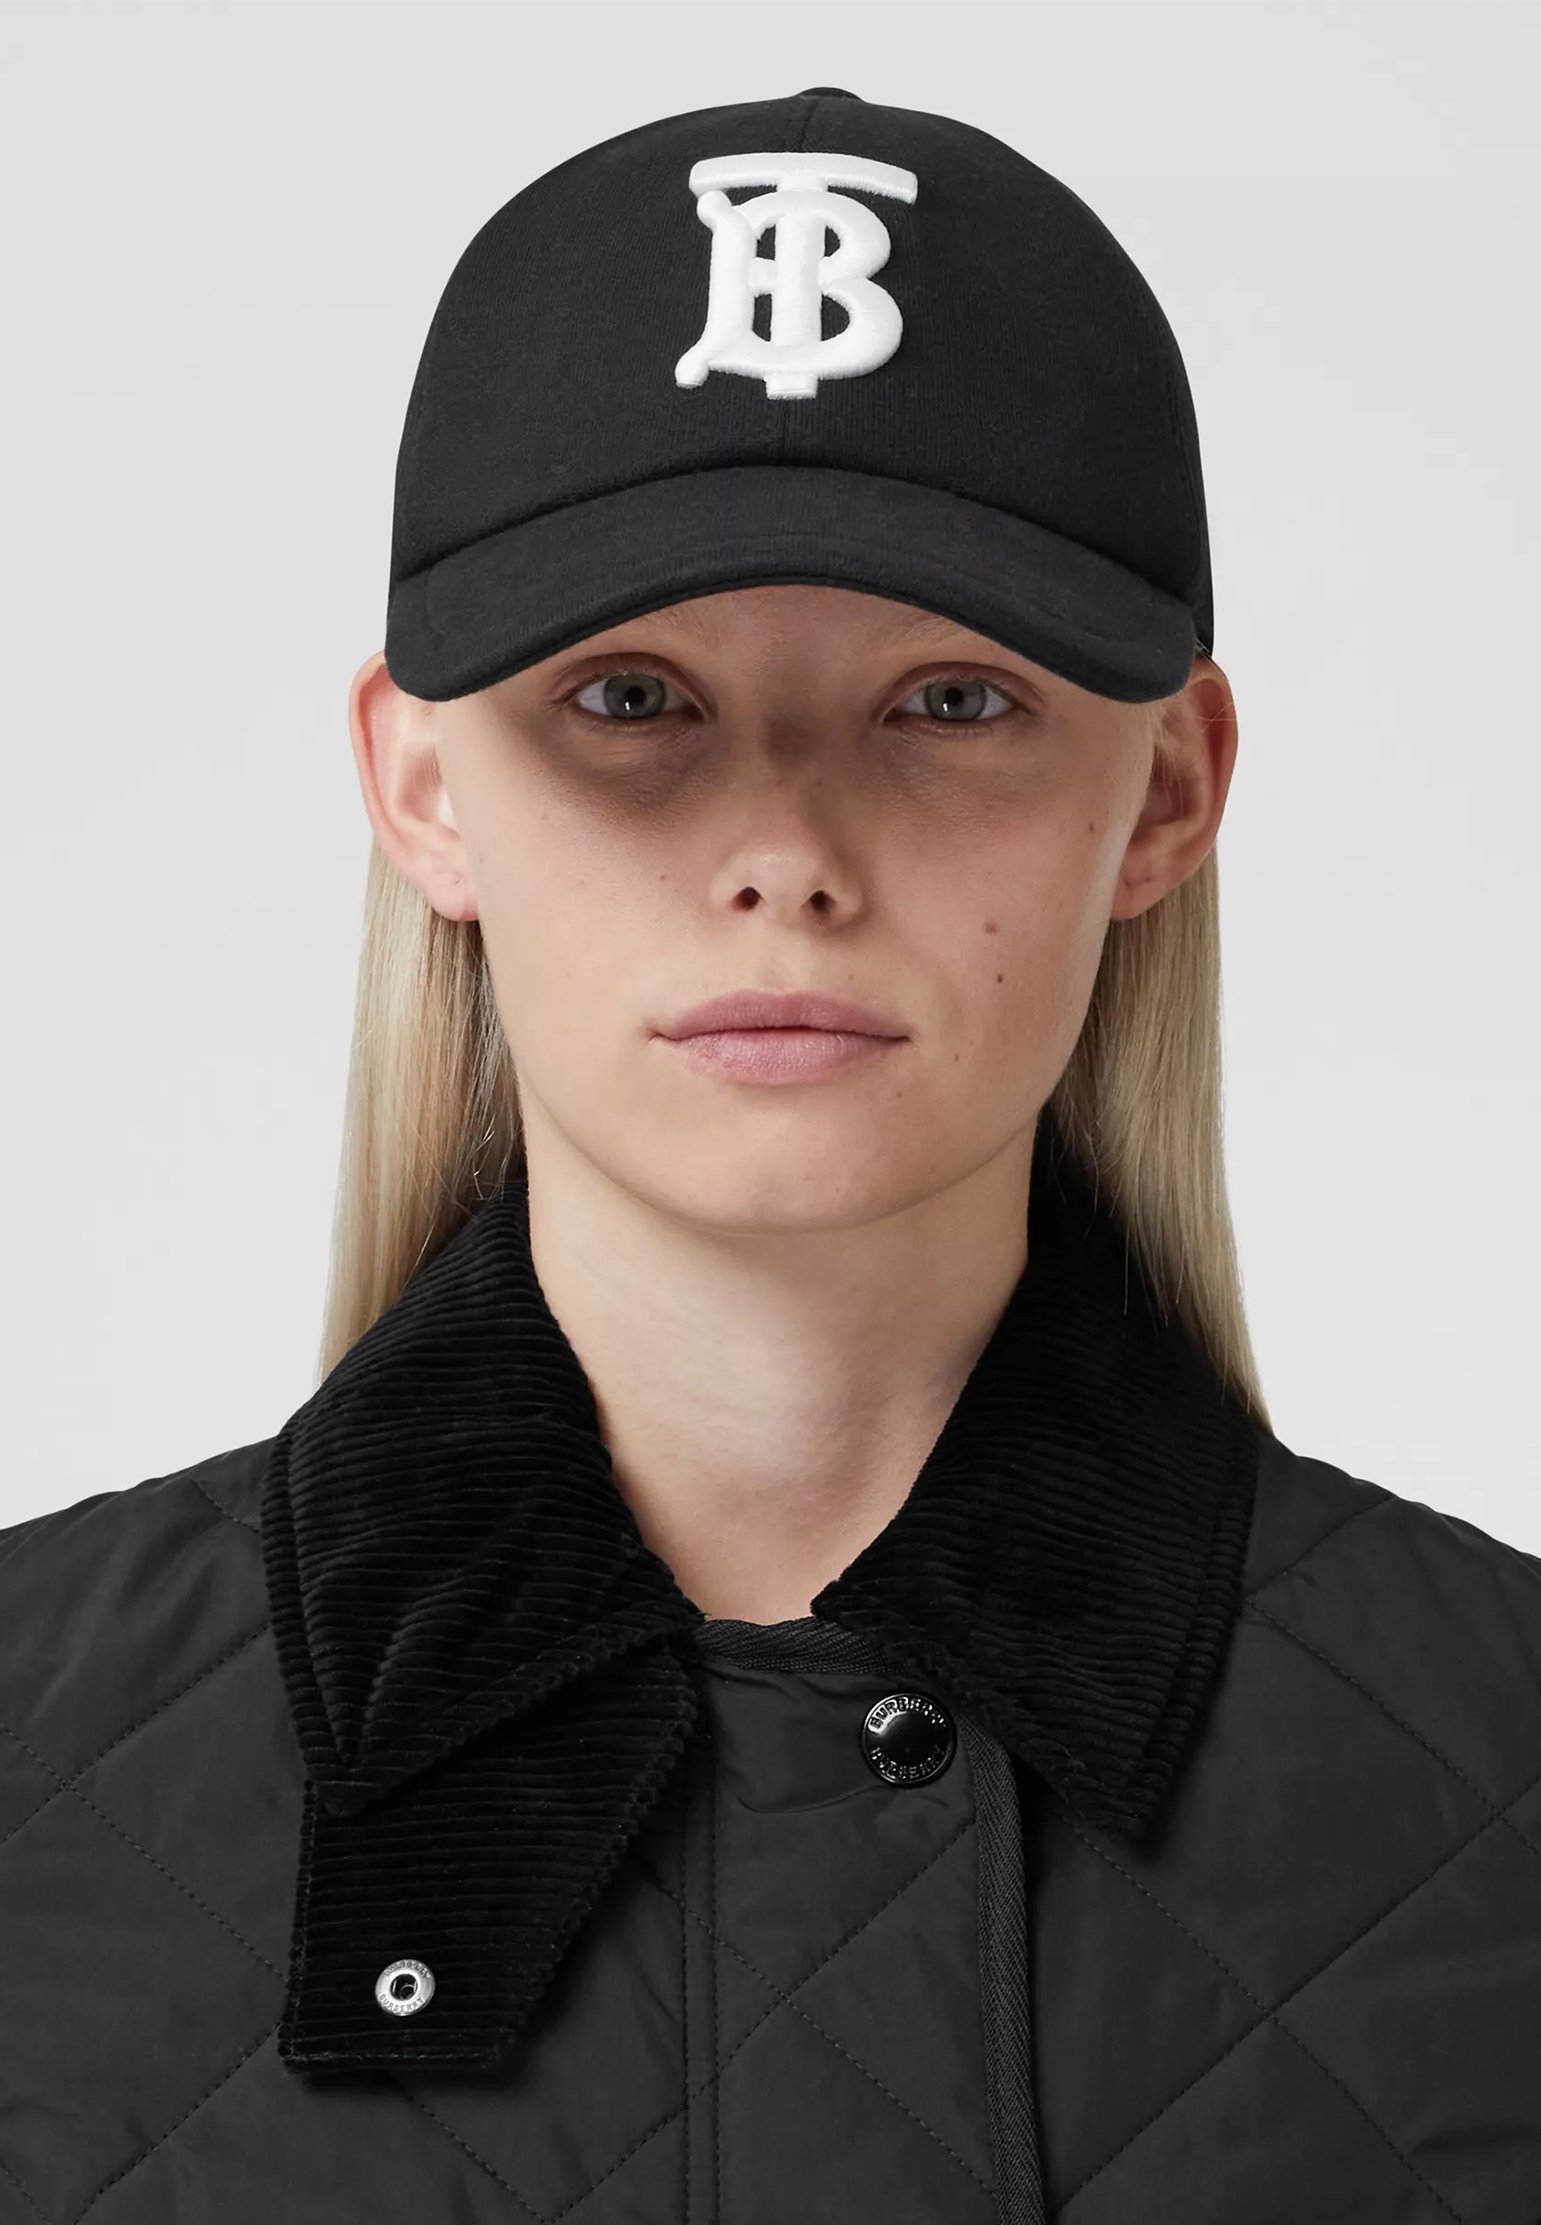 Baseball cap BURBERRY Color: black (Code: 905) in online store Allure